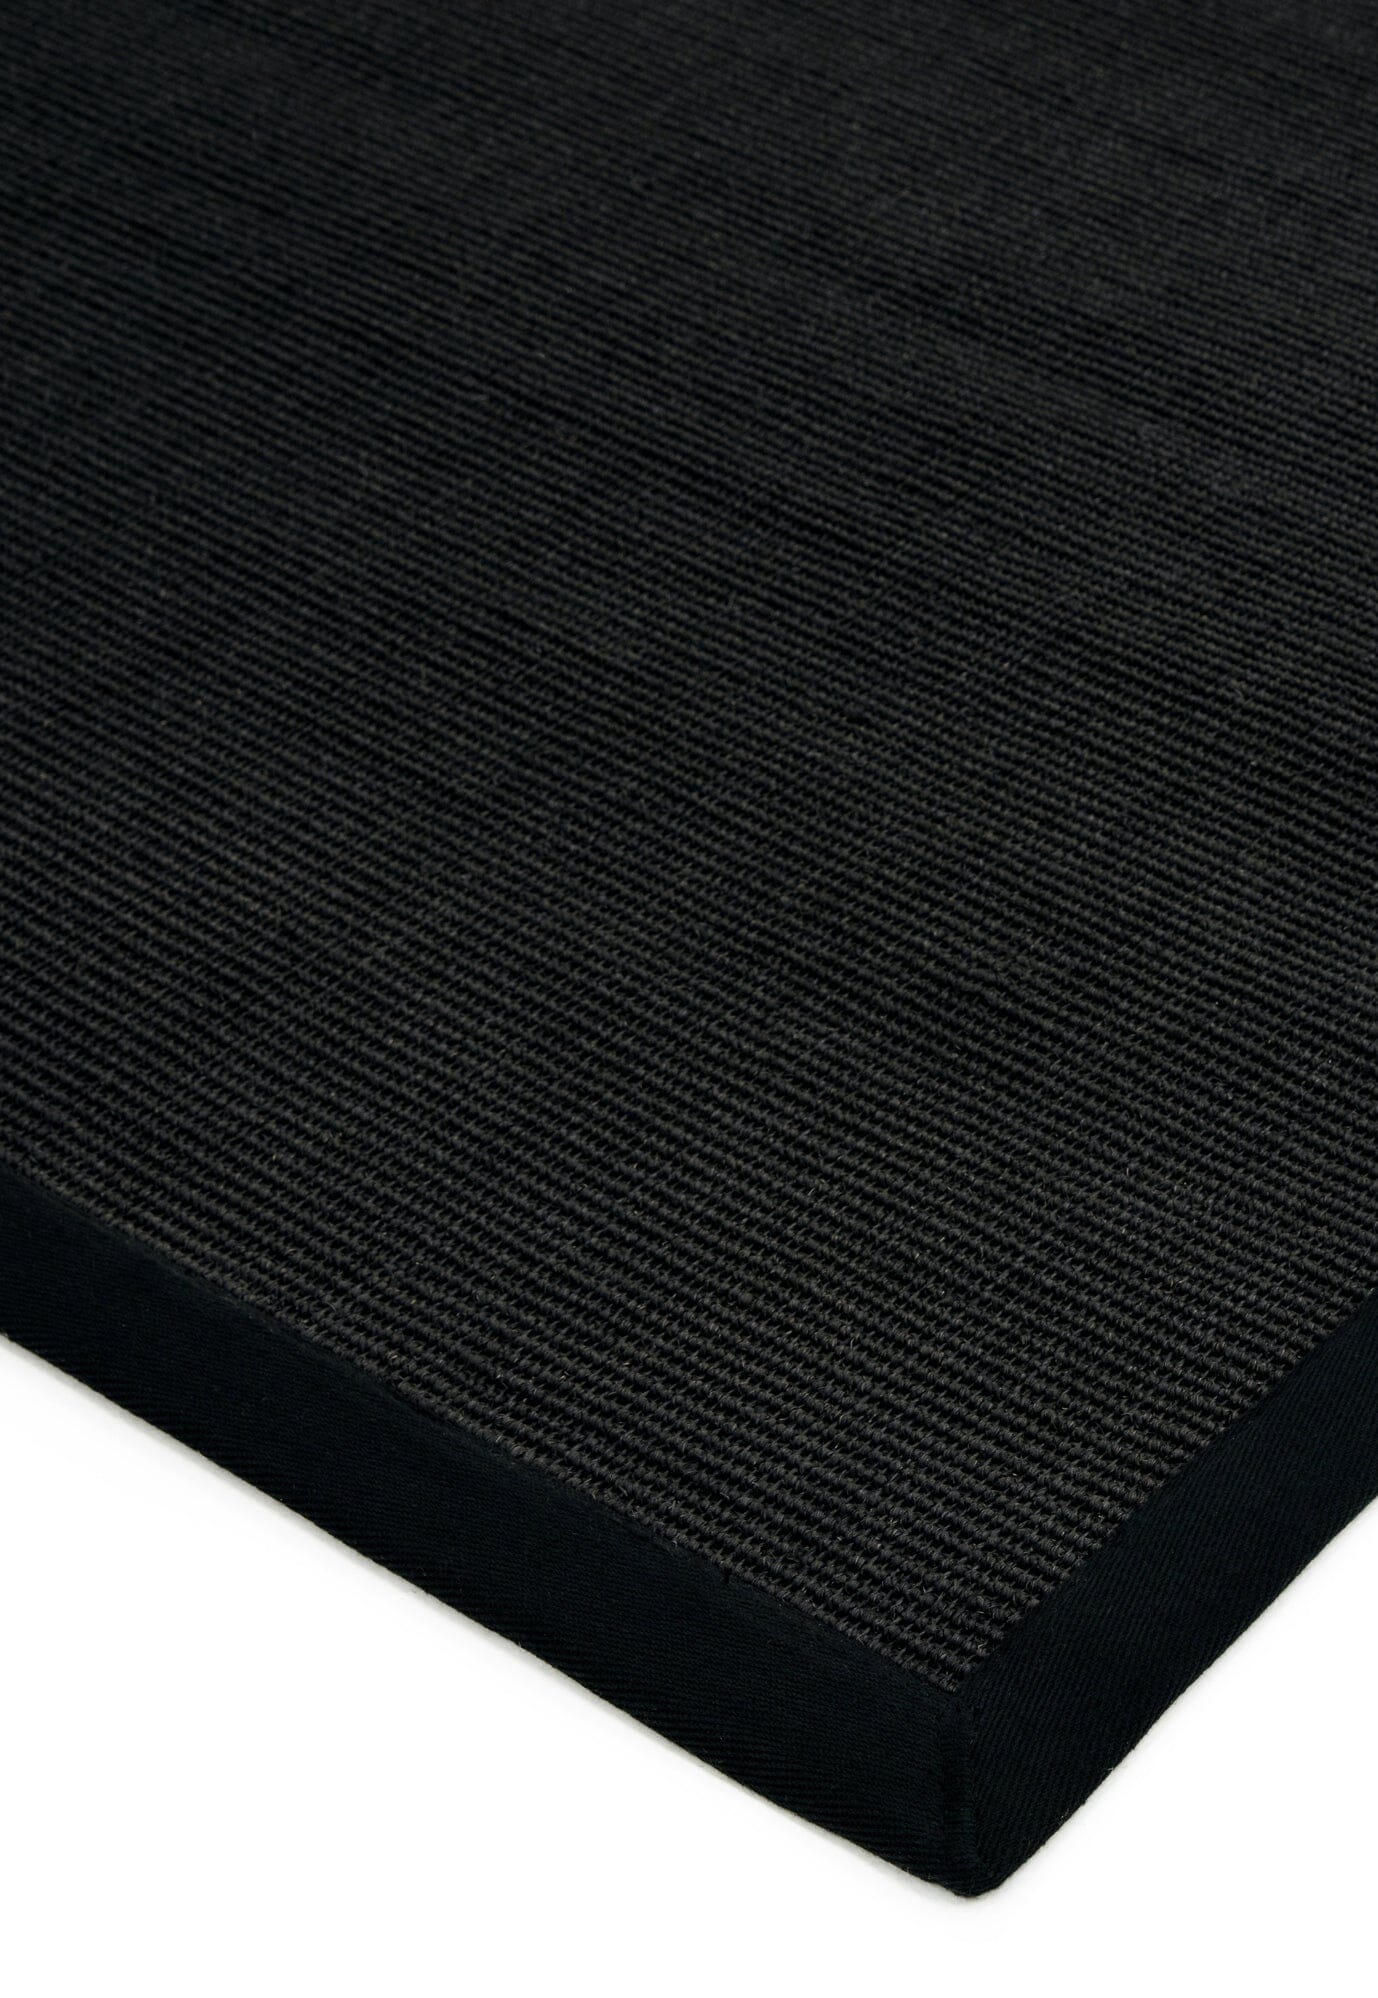  Asiatic Carpets-Asiatic Carpets Sisal Machine Woven Rug Black/Black - 240 x 340cm-Black 525 